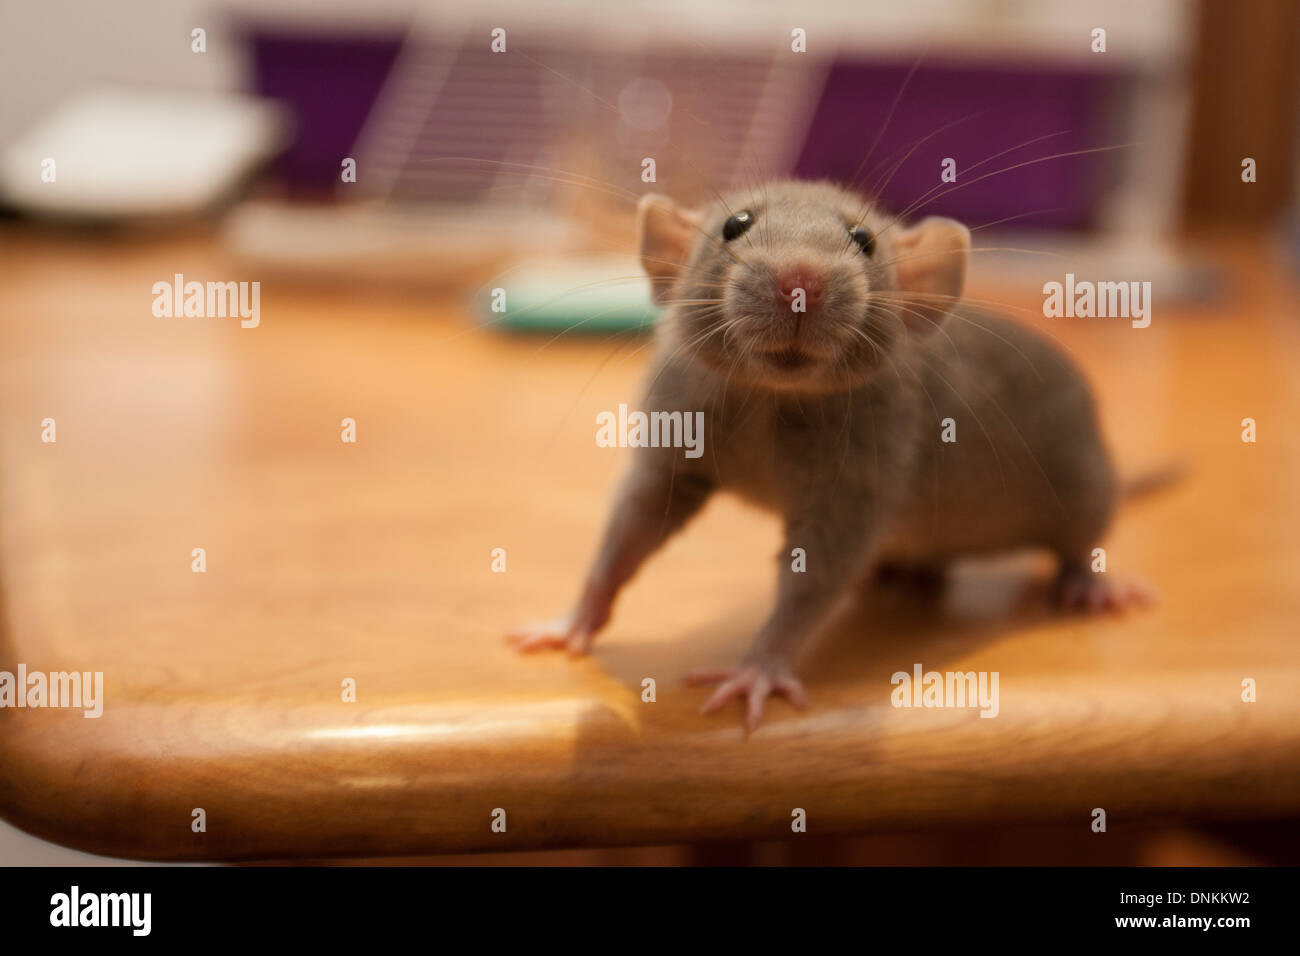 Pet rat on table Stock Photo